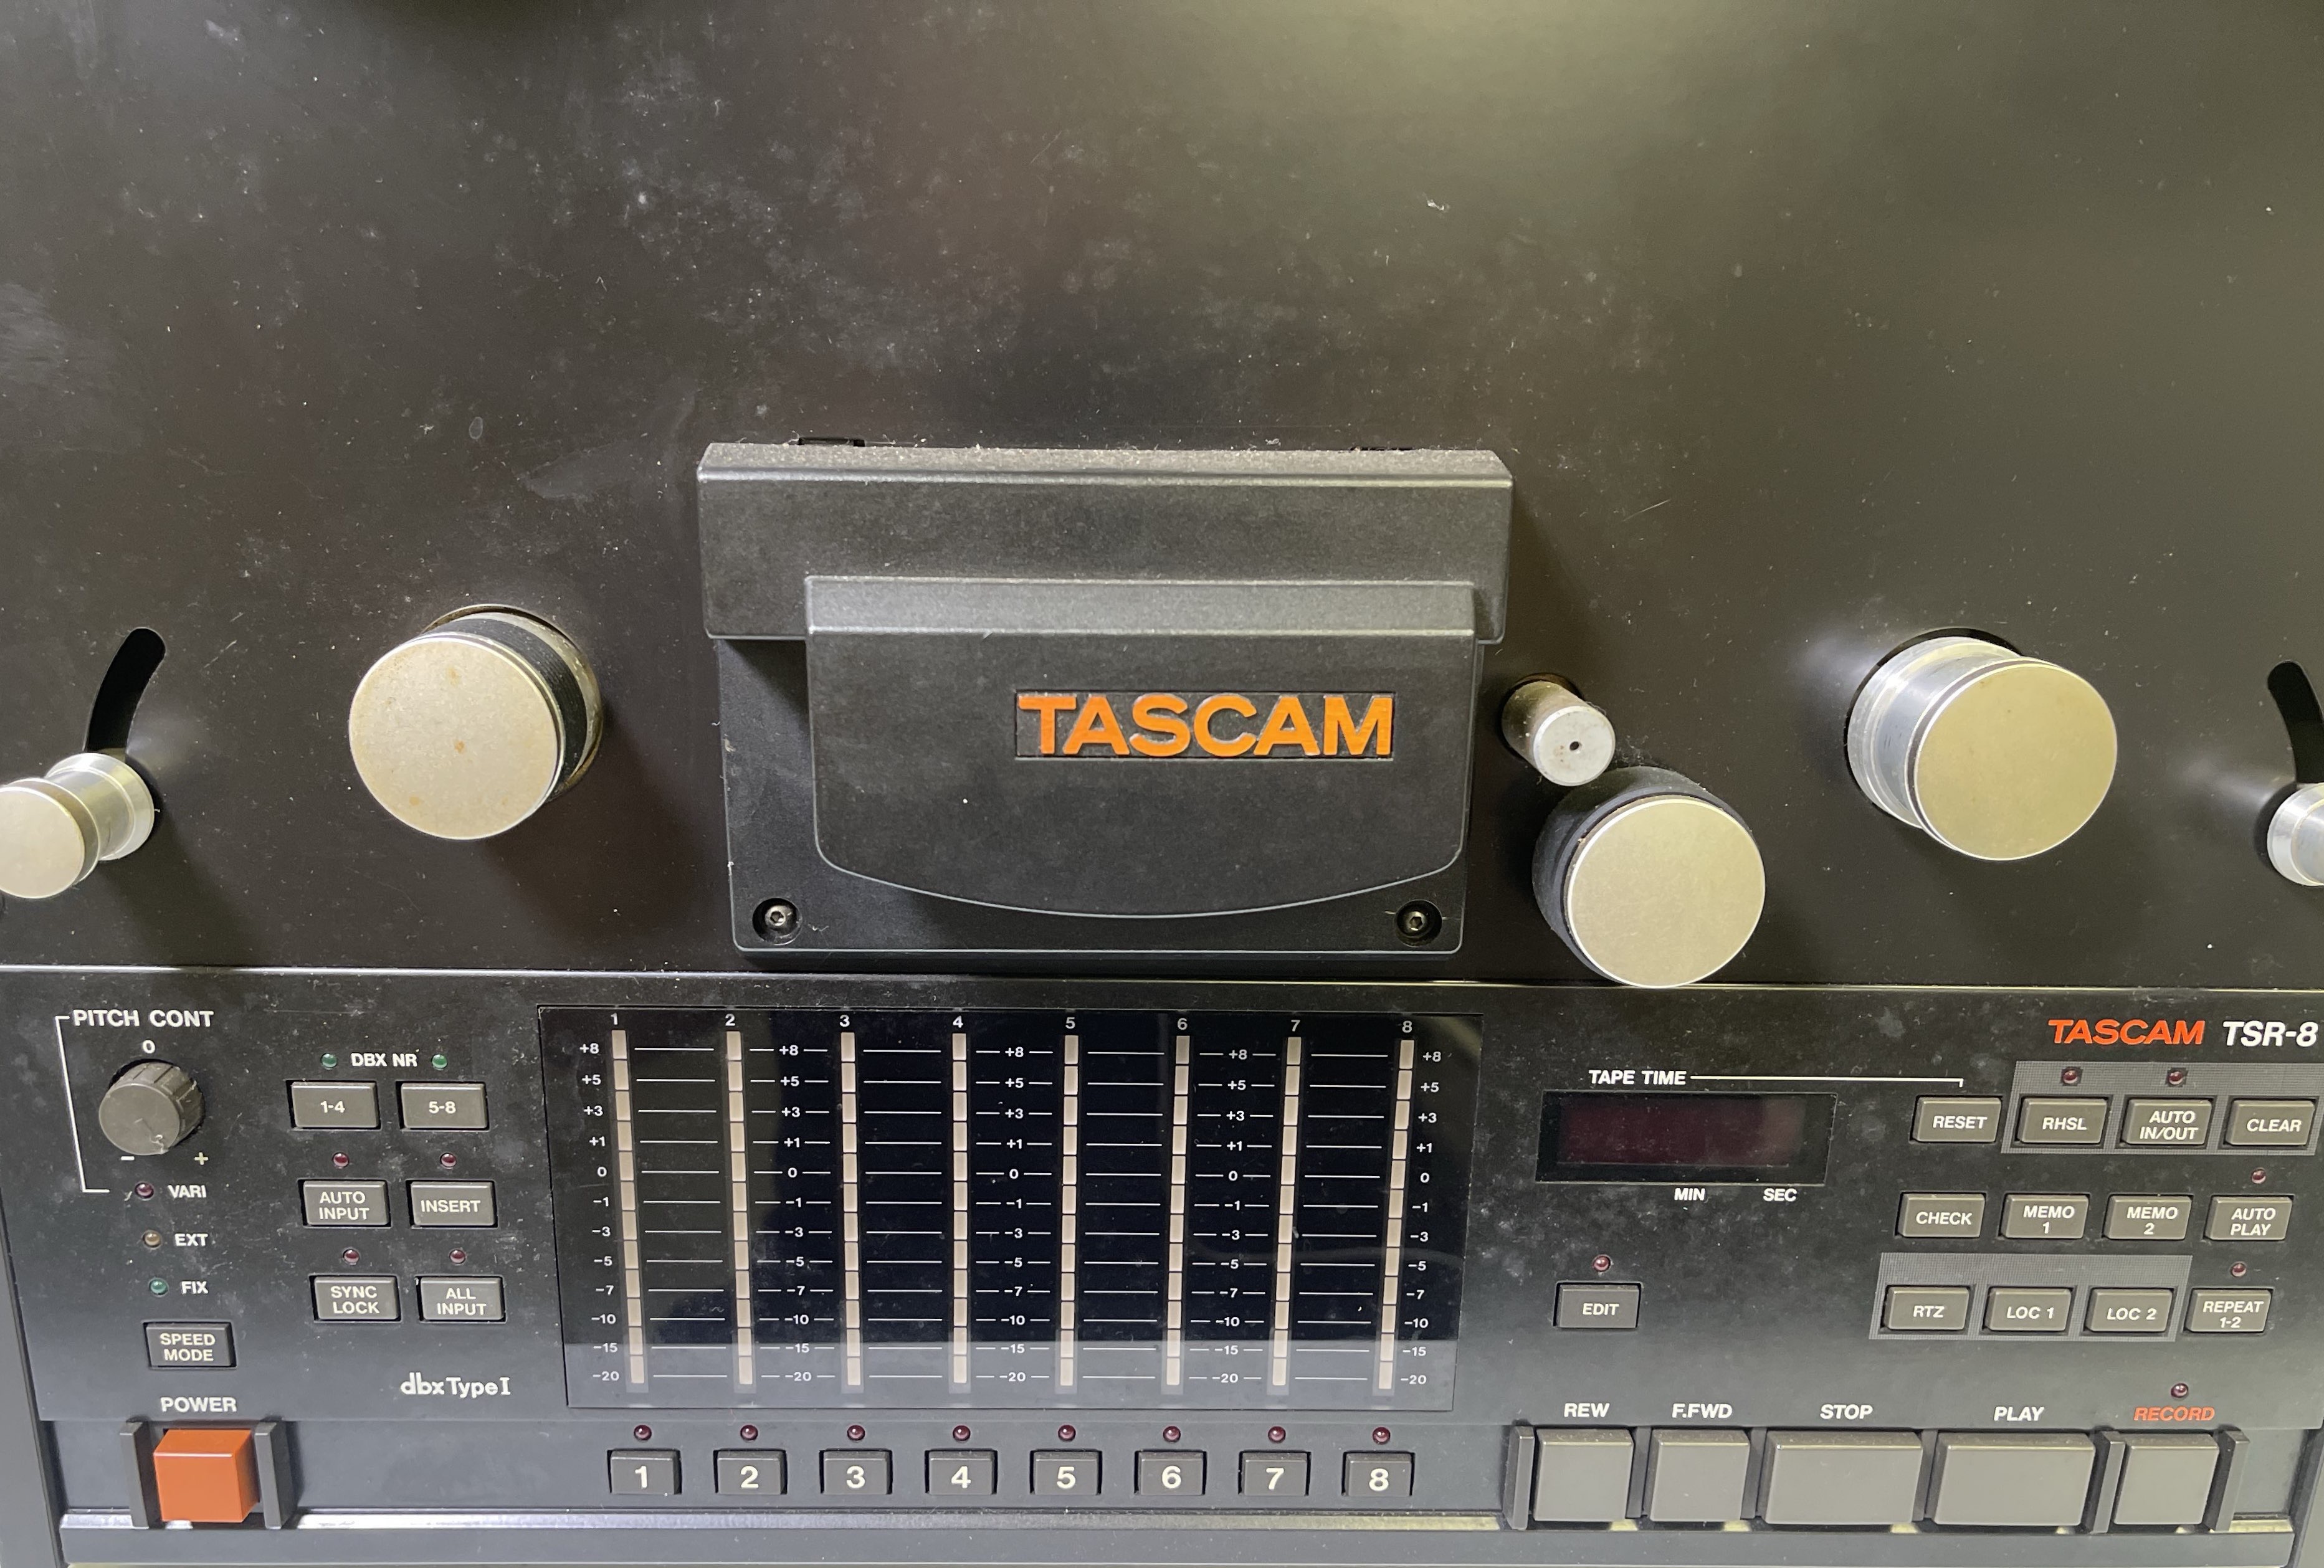 Tascam TSR-8 1/2 8 Track Reel To Reel Tape Recorder - musical